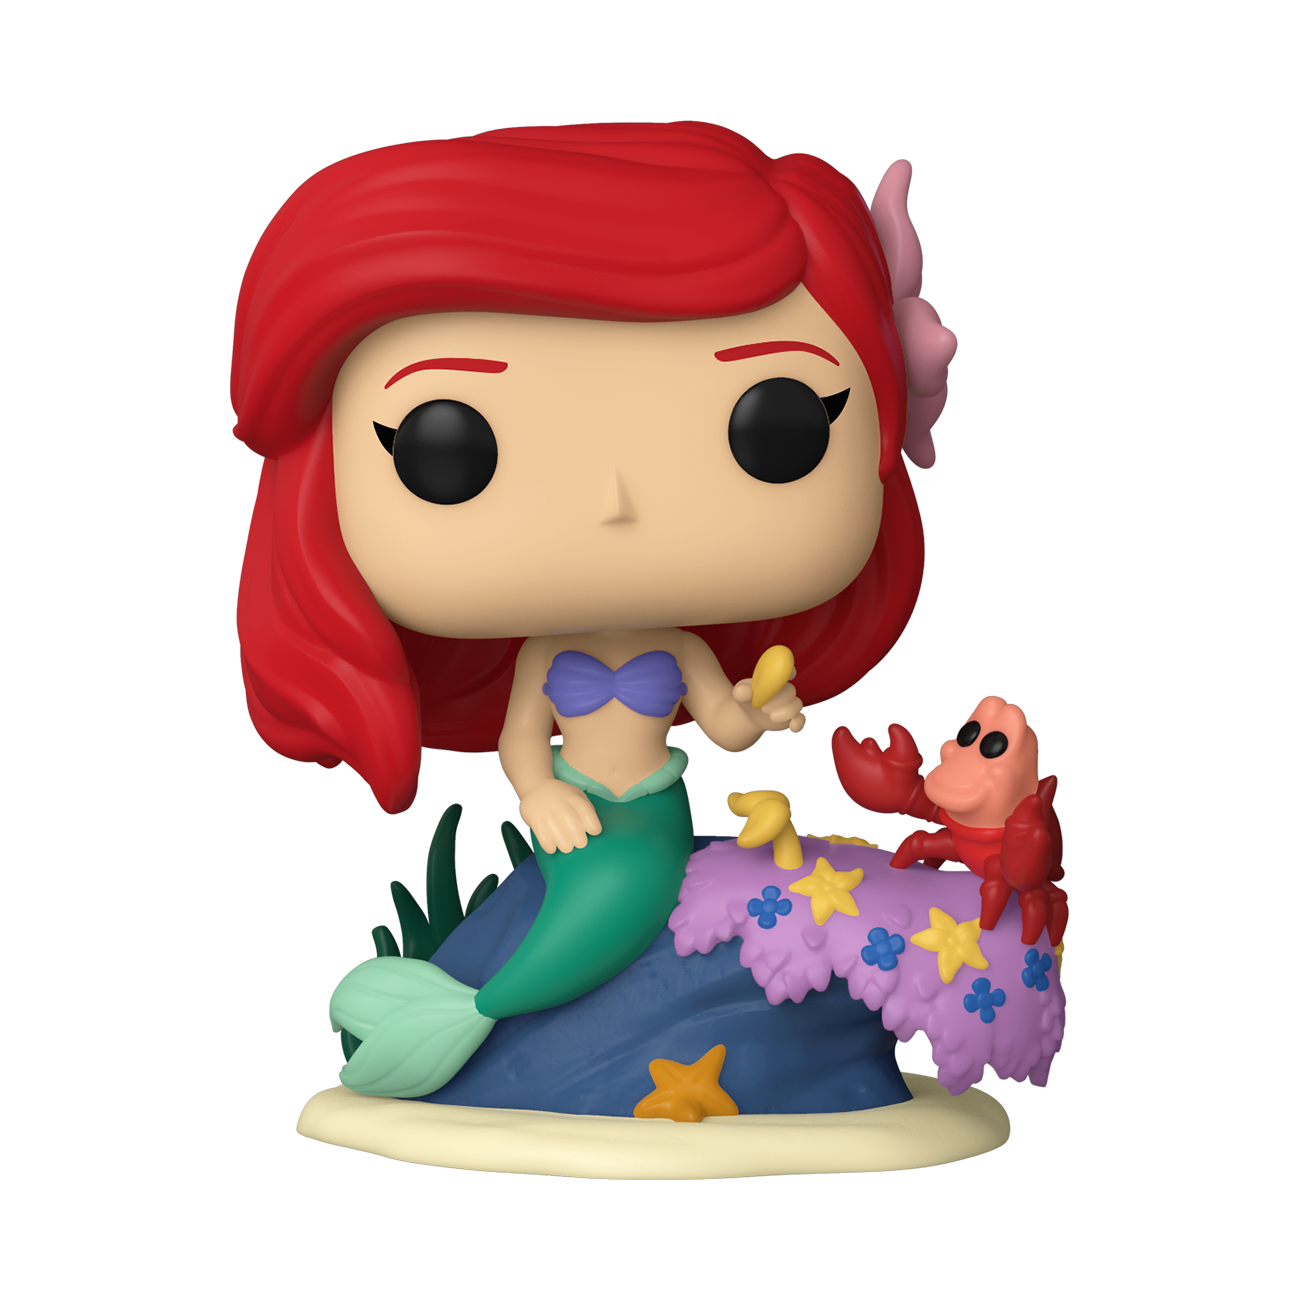 Disney - POP! Ultimate Princess Ariel.